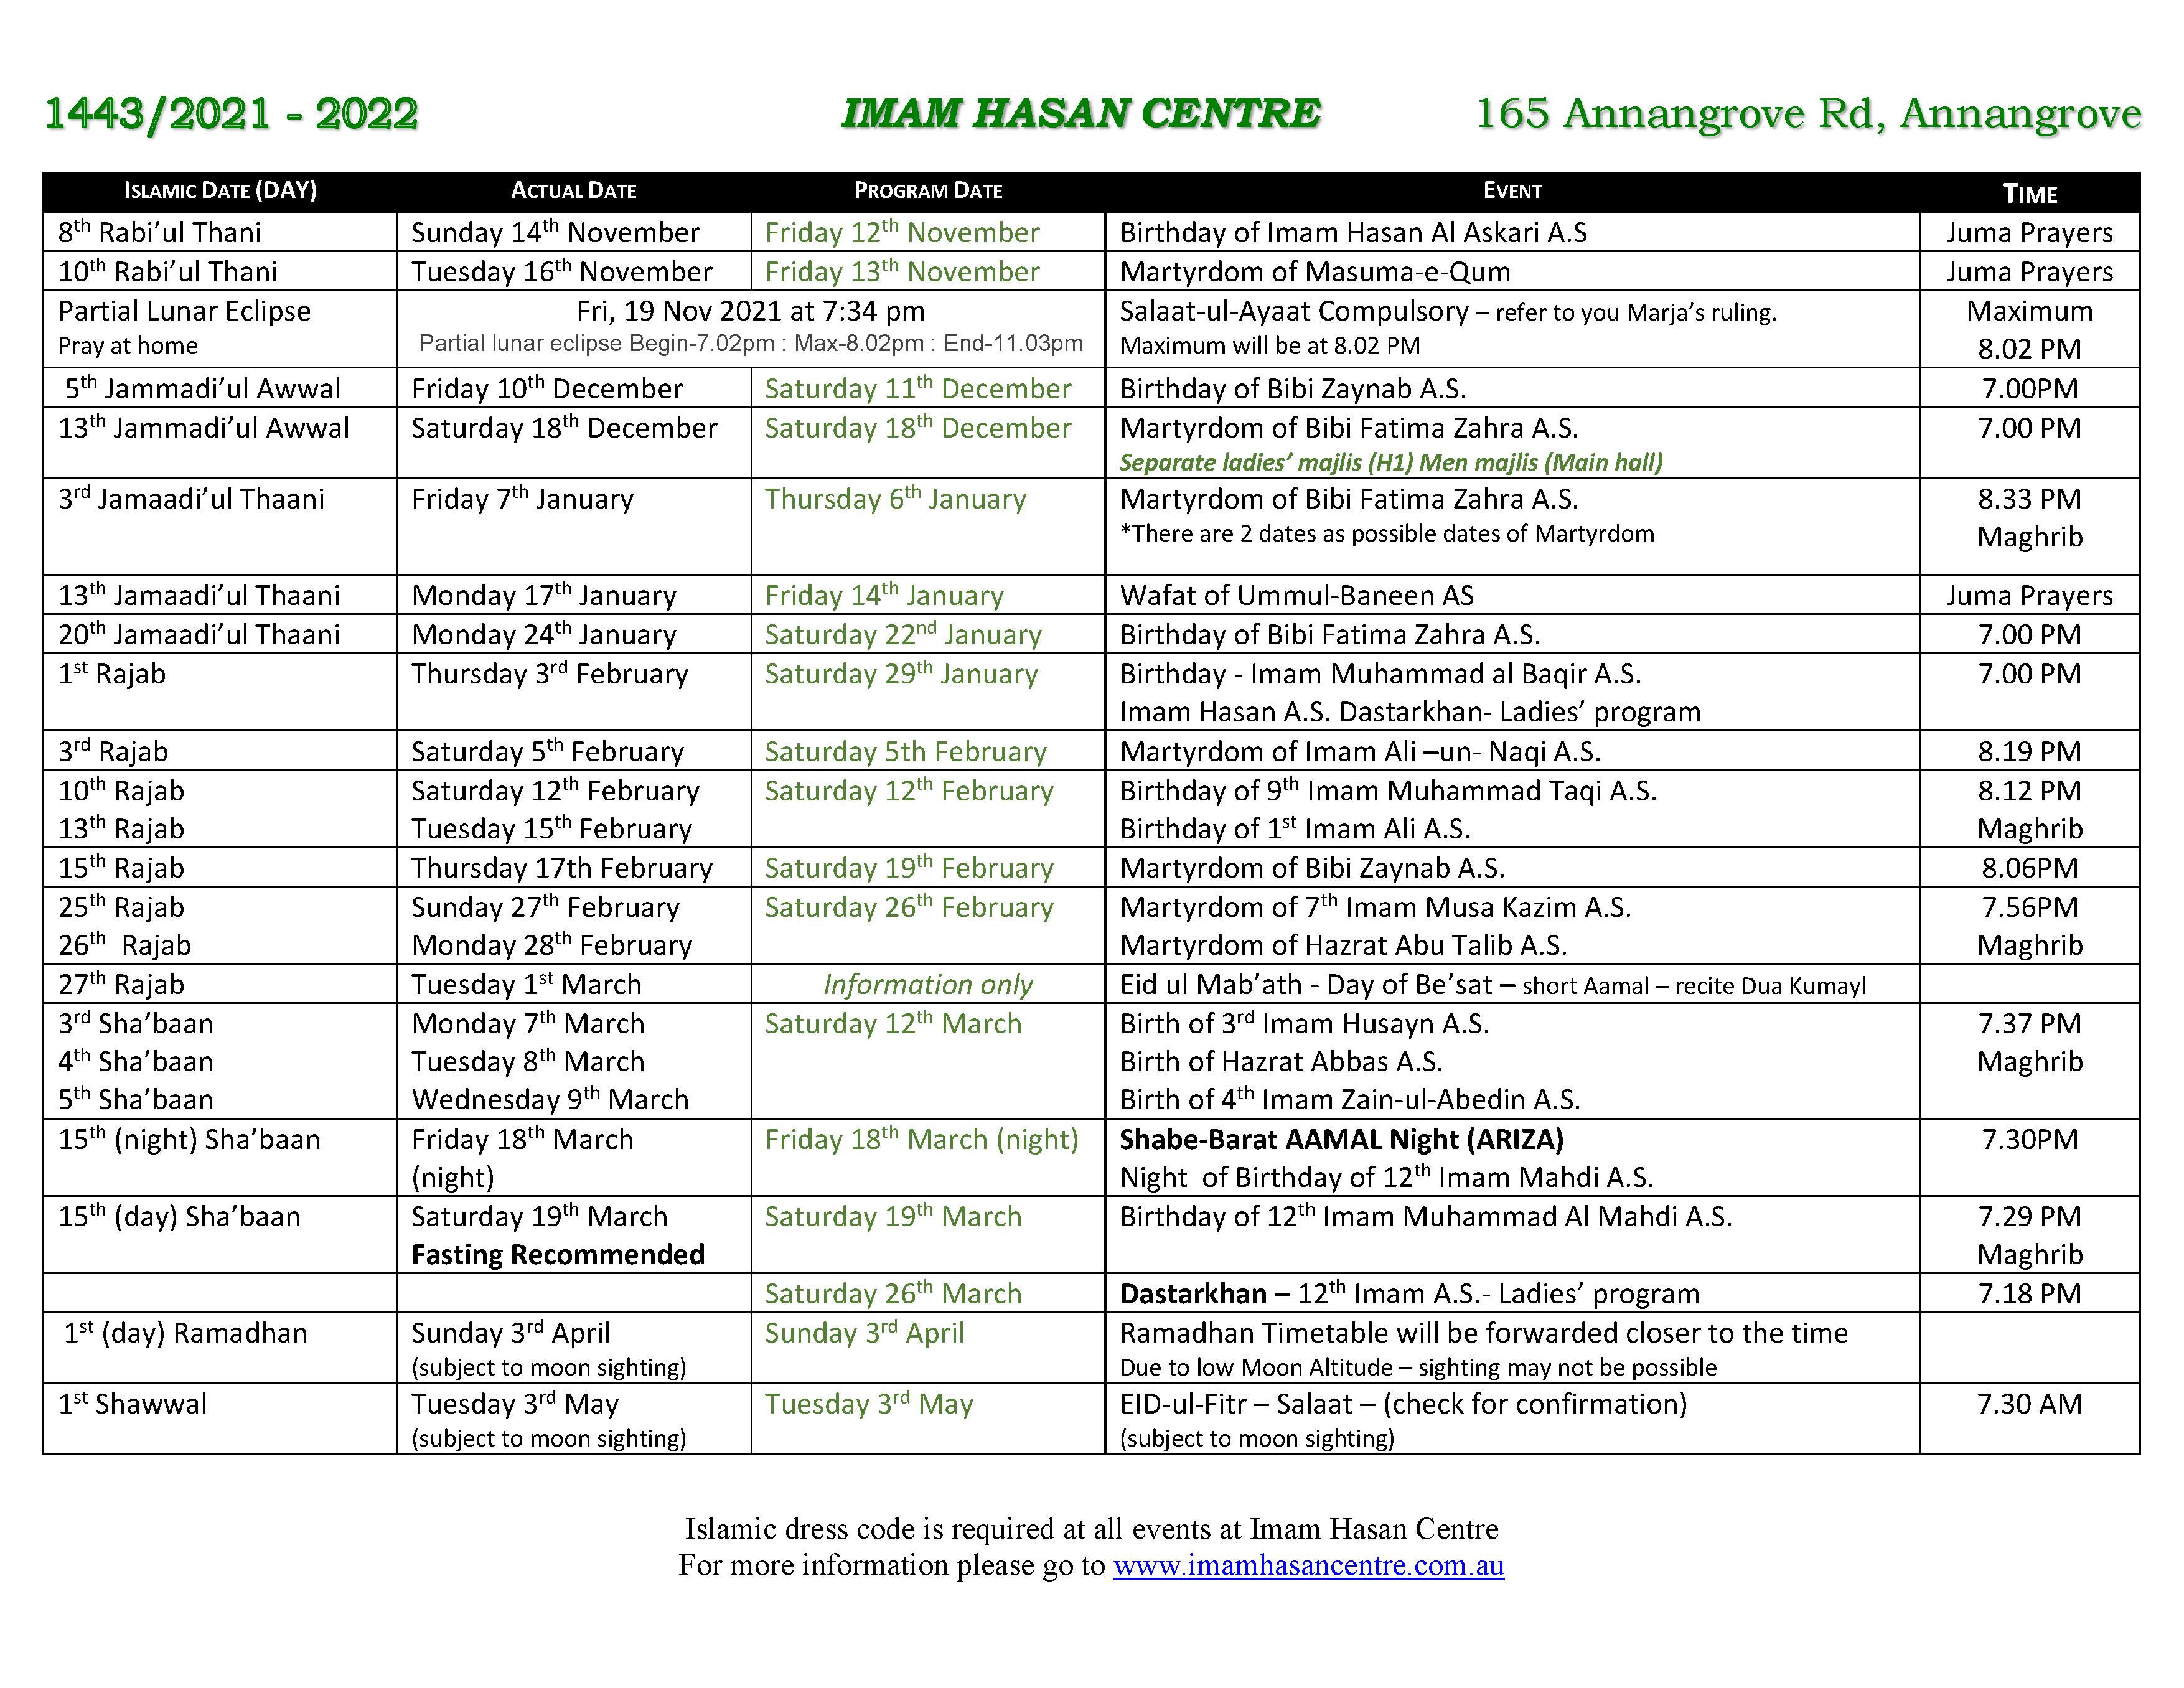 Rabbi’u Thani to Ramadhan Events Calendar 2021 – 2022